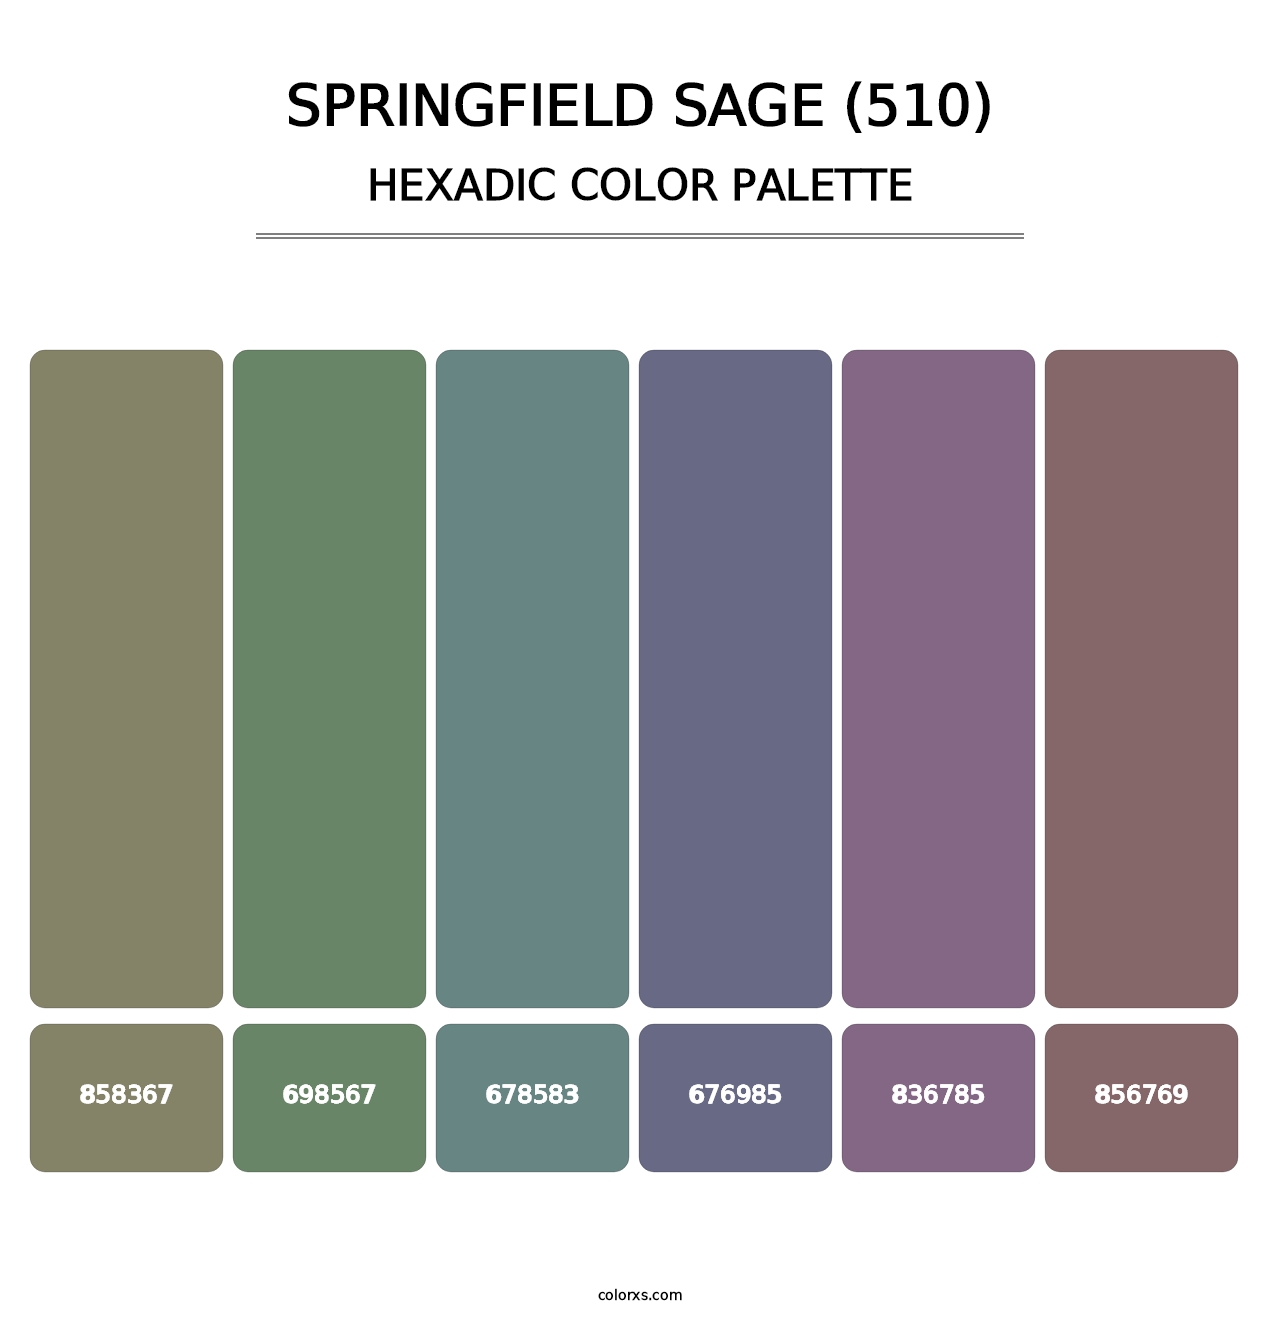 Springfield Sage (510) - Hexadic Color Palette